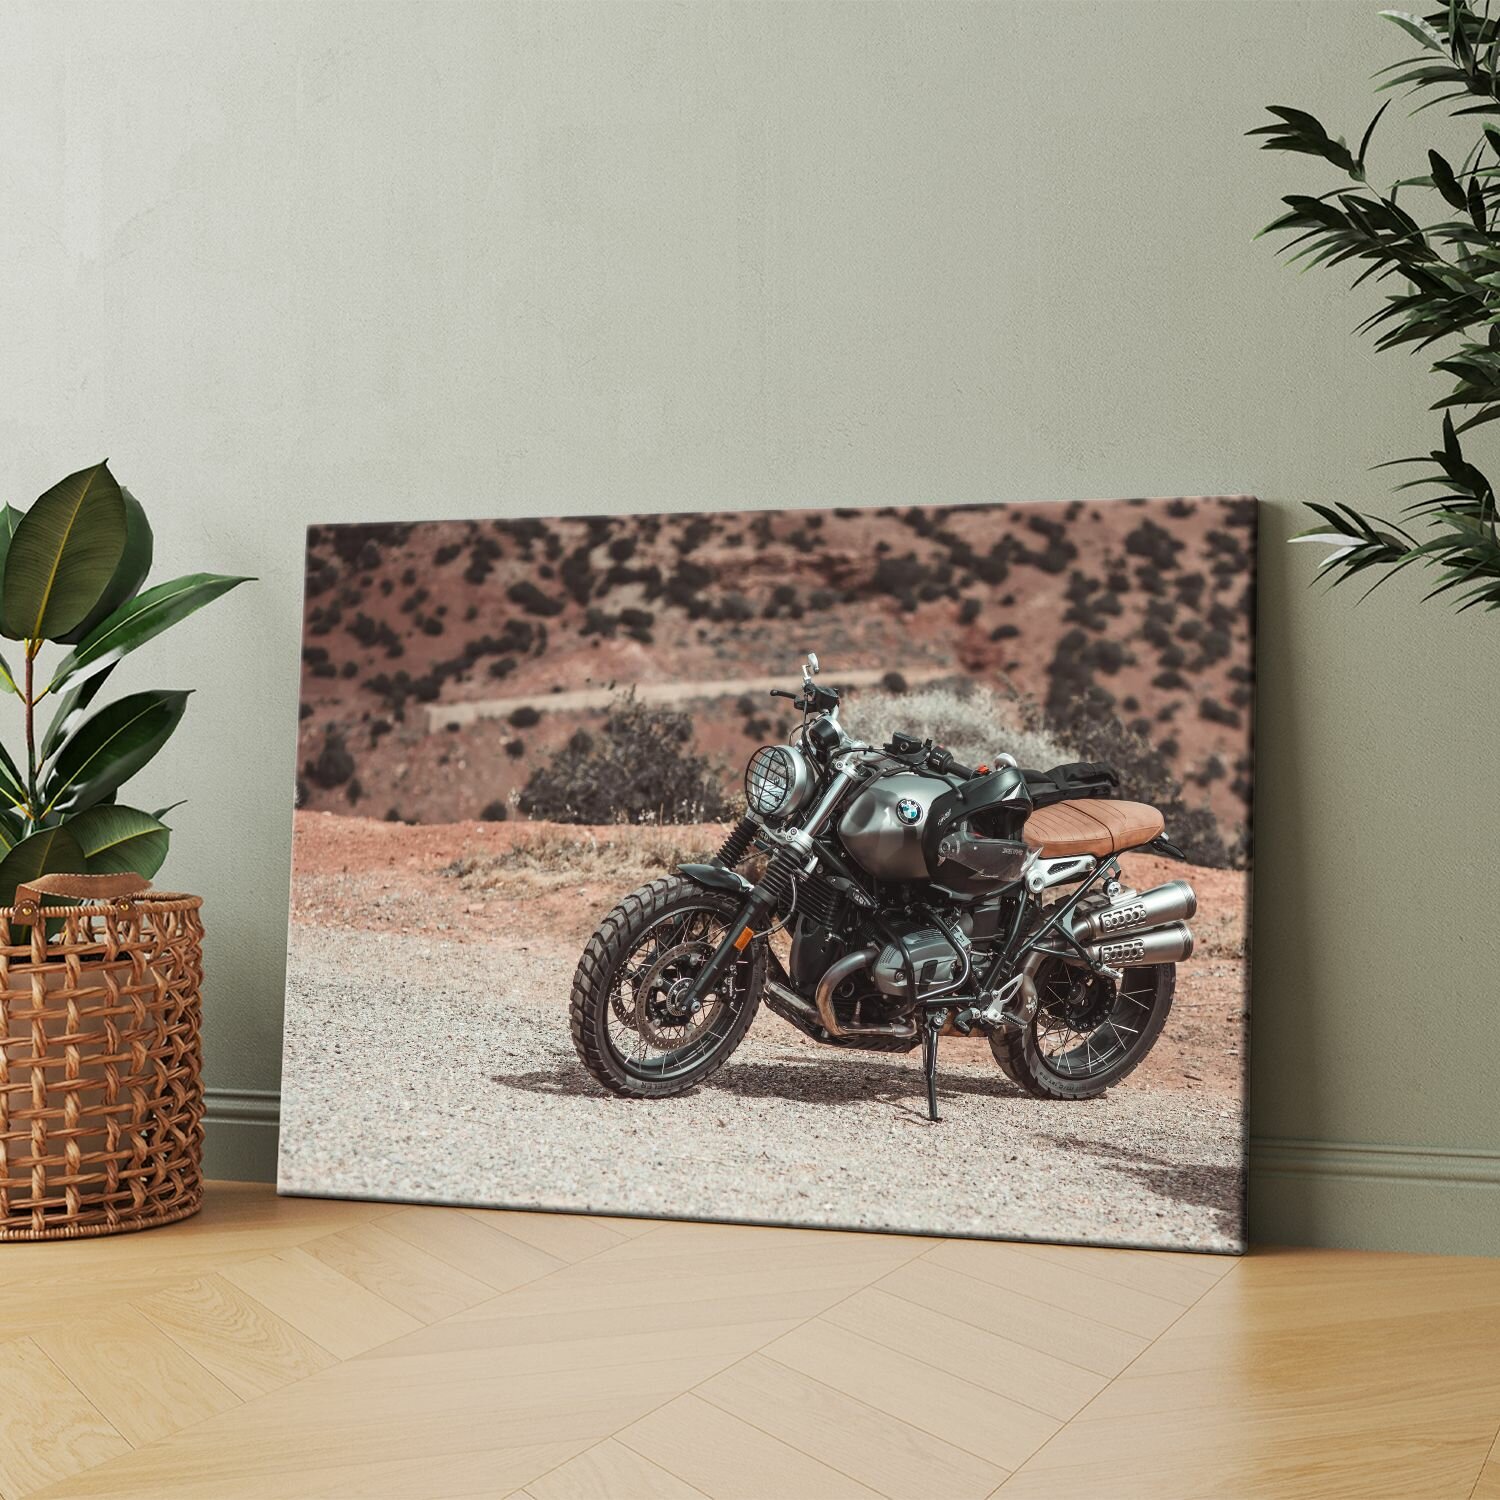 Картина на холсте (Мотоцикл BMW R1200 Scrambler) 50x70 см. Интерьерная, на стену.